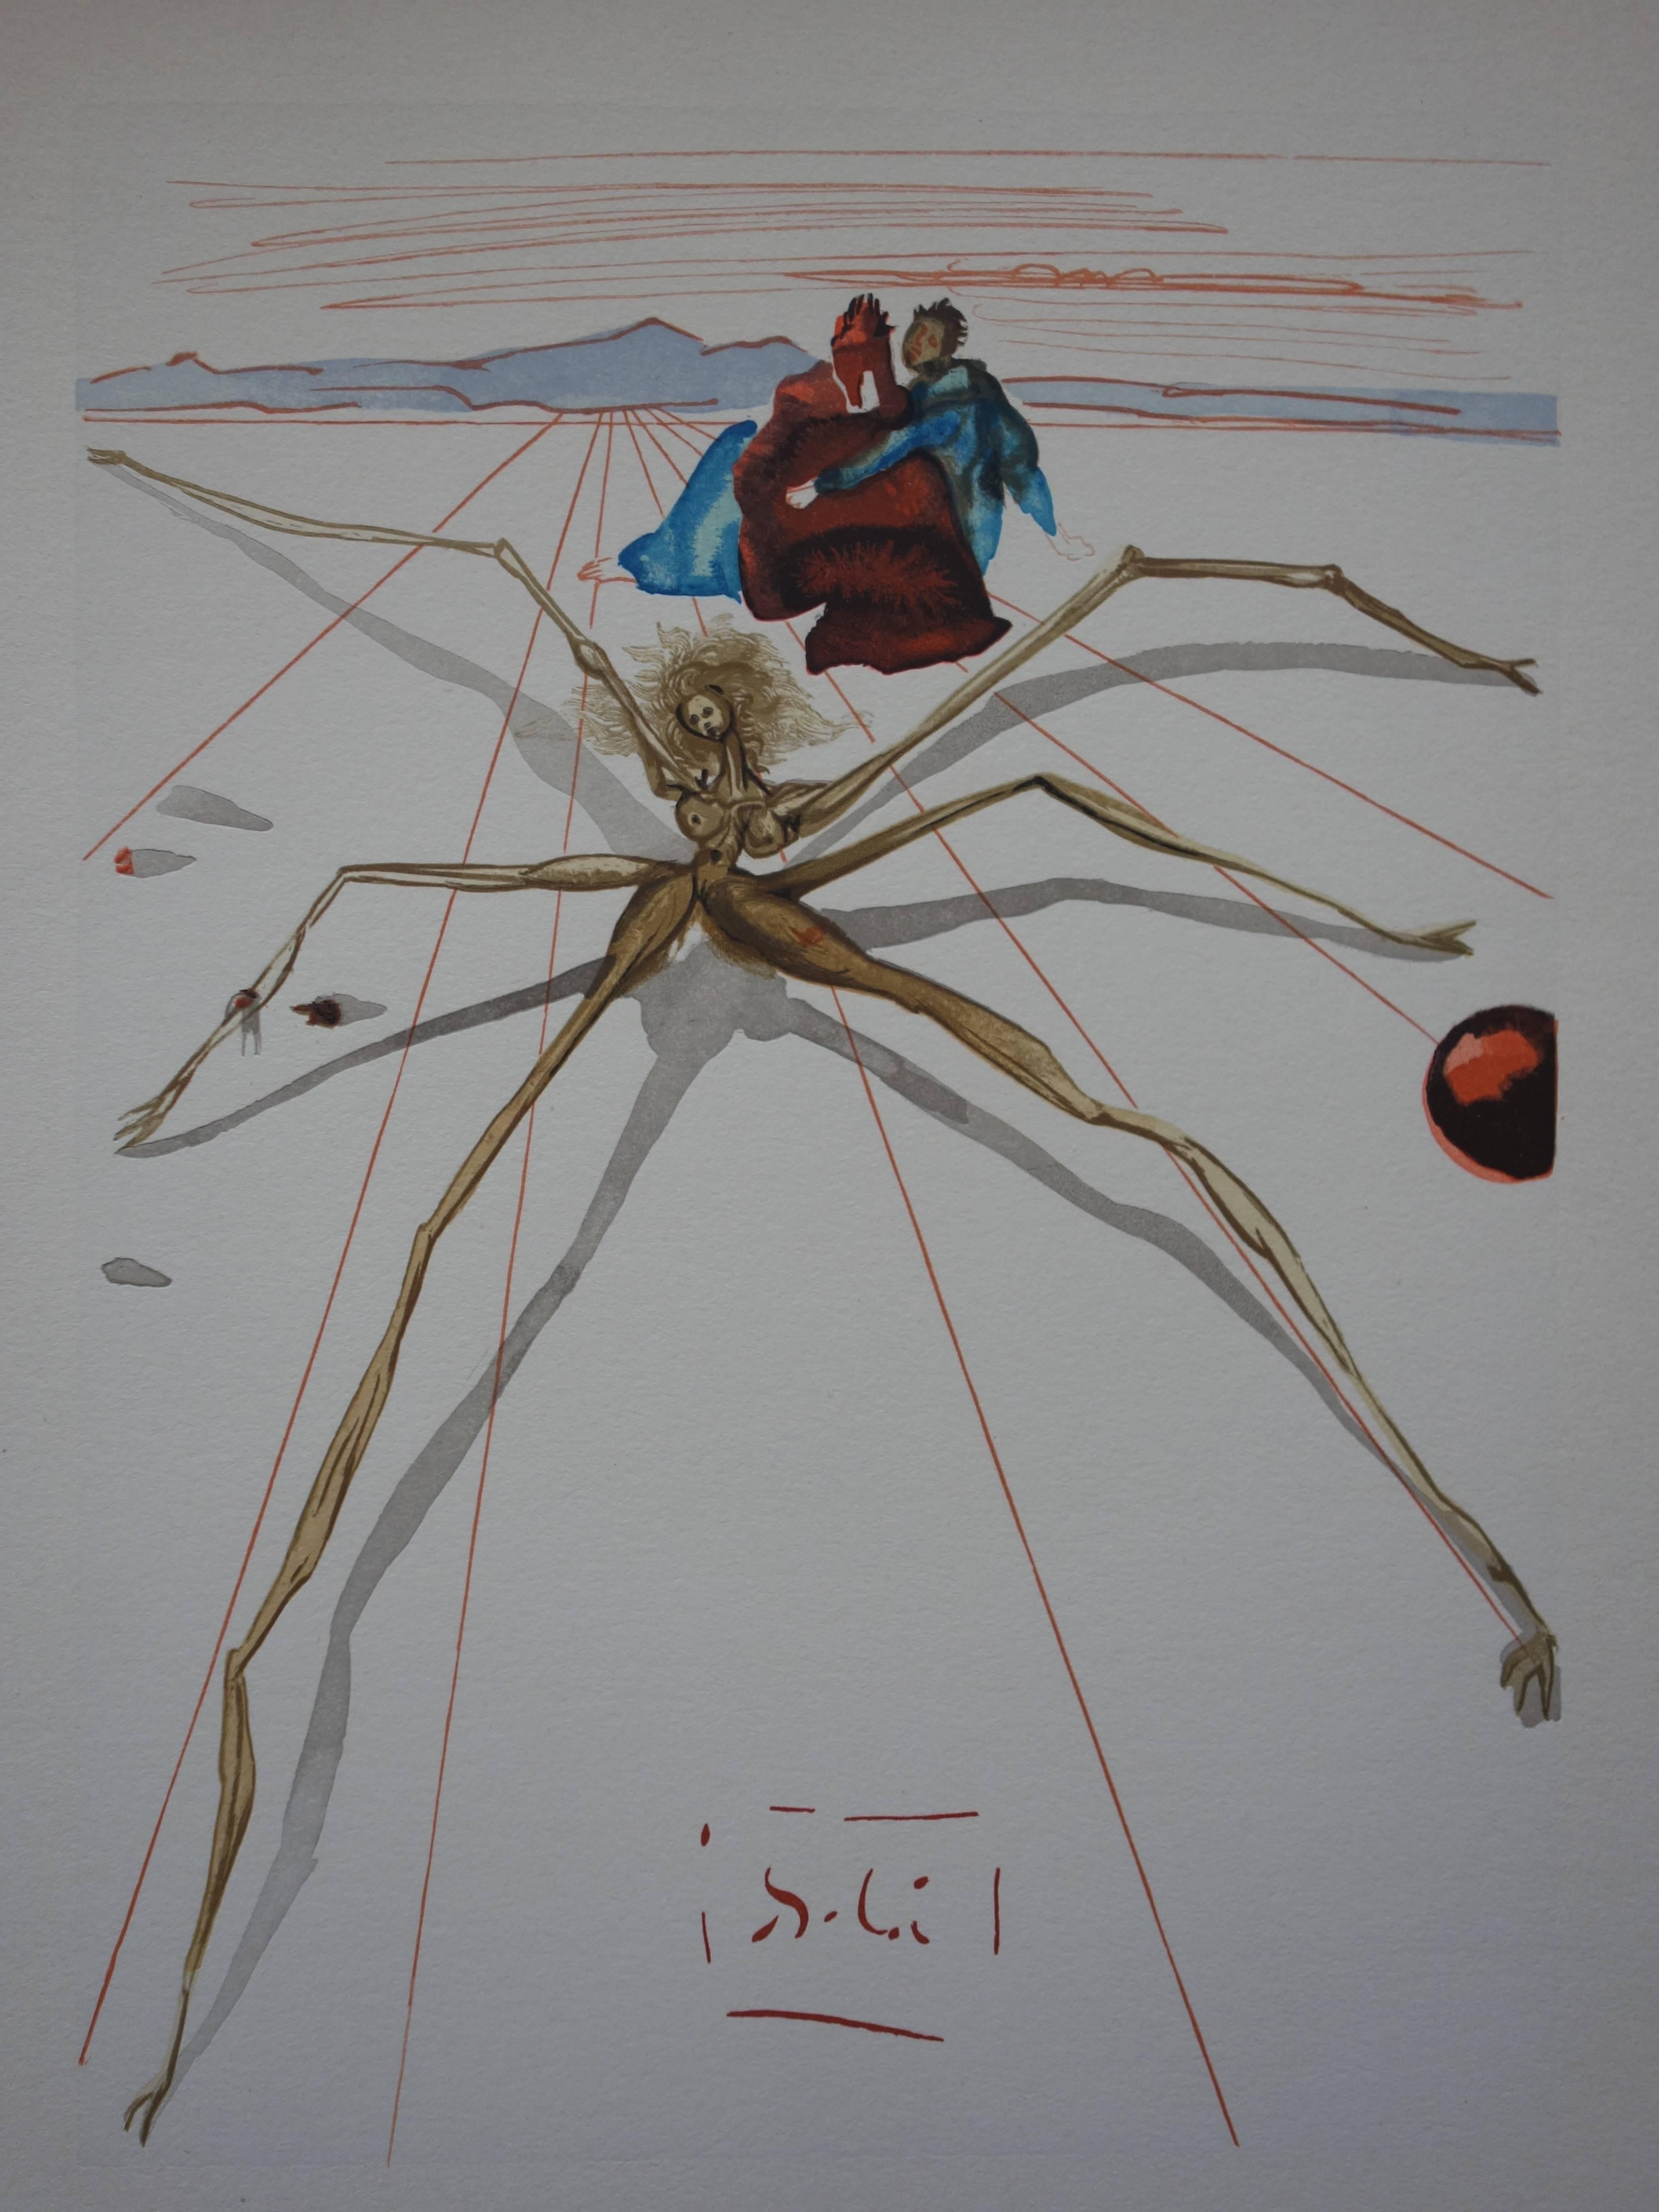 Purgatory 17 - Leaving the Ledge of Anger - Color woodcut - 1963 - Surrealist Print by Salvador Dalí